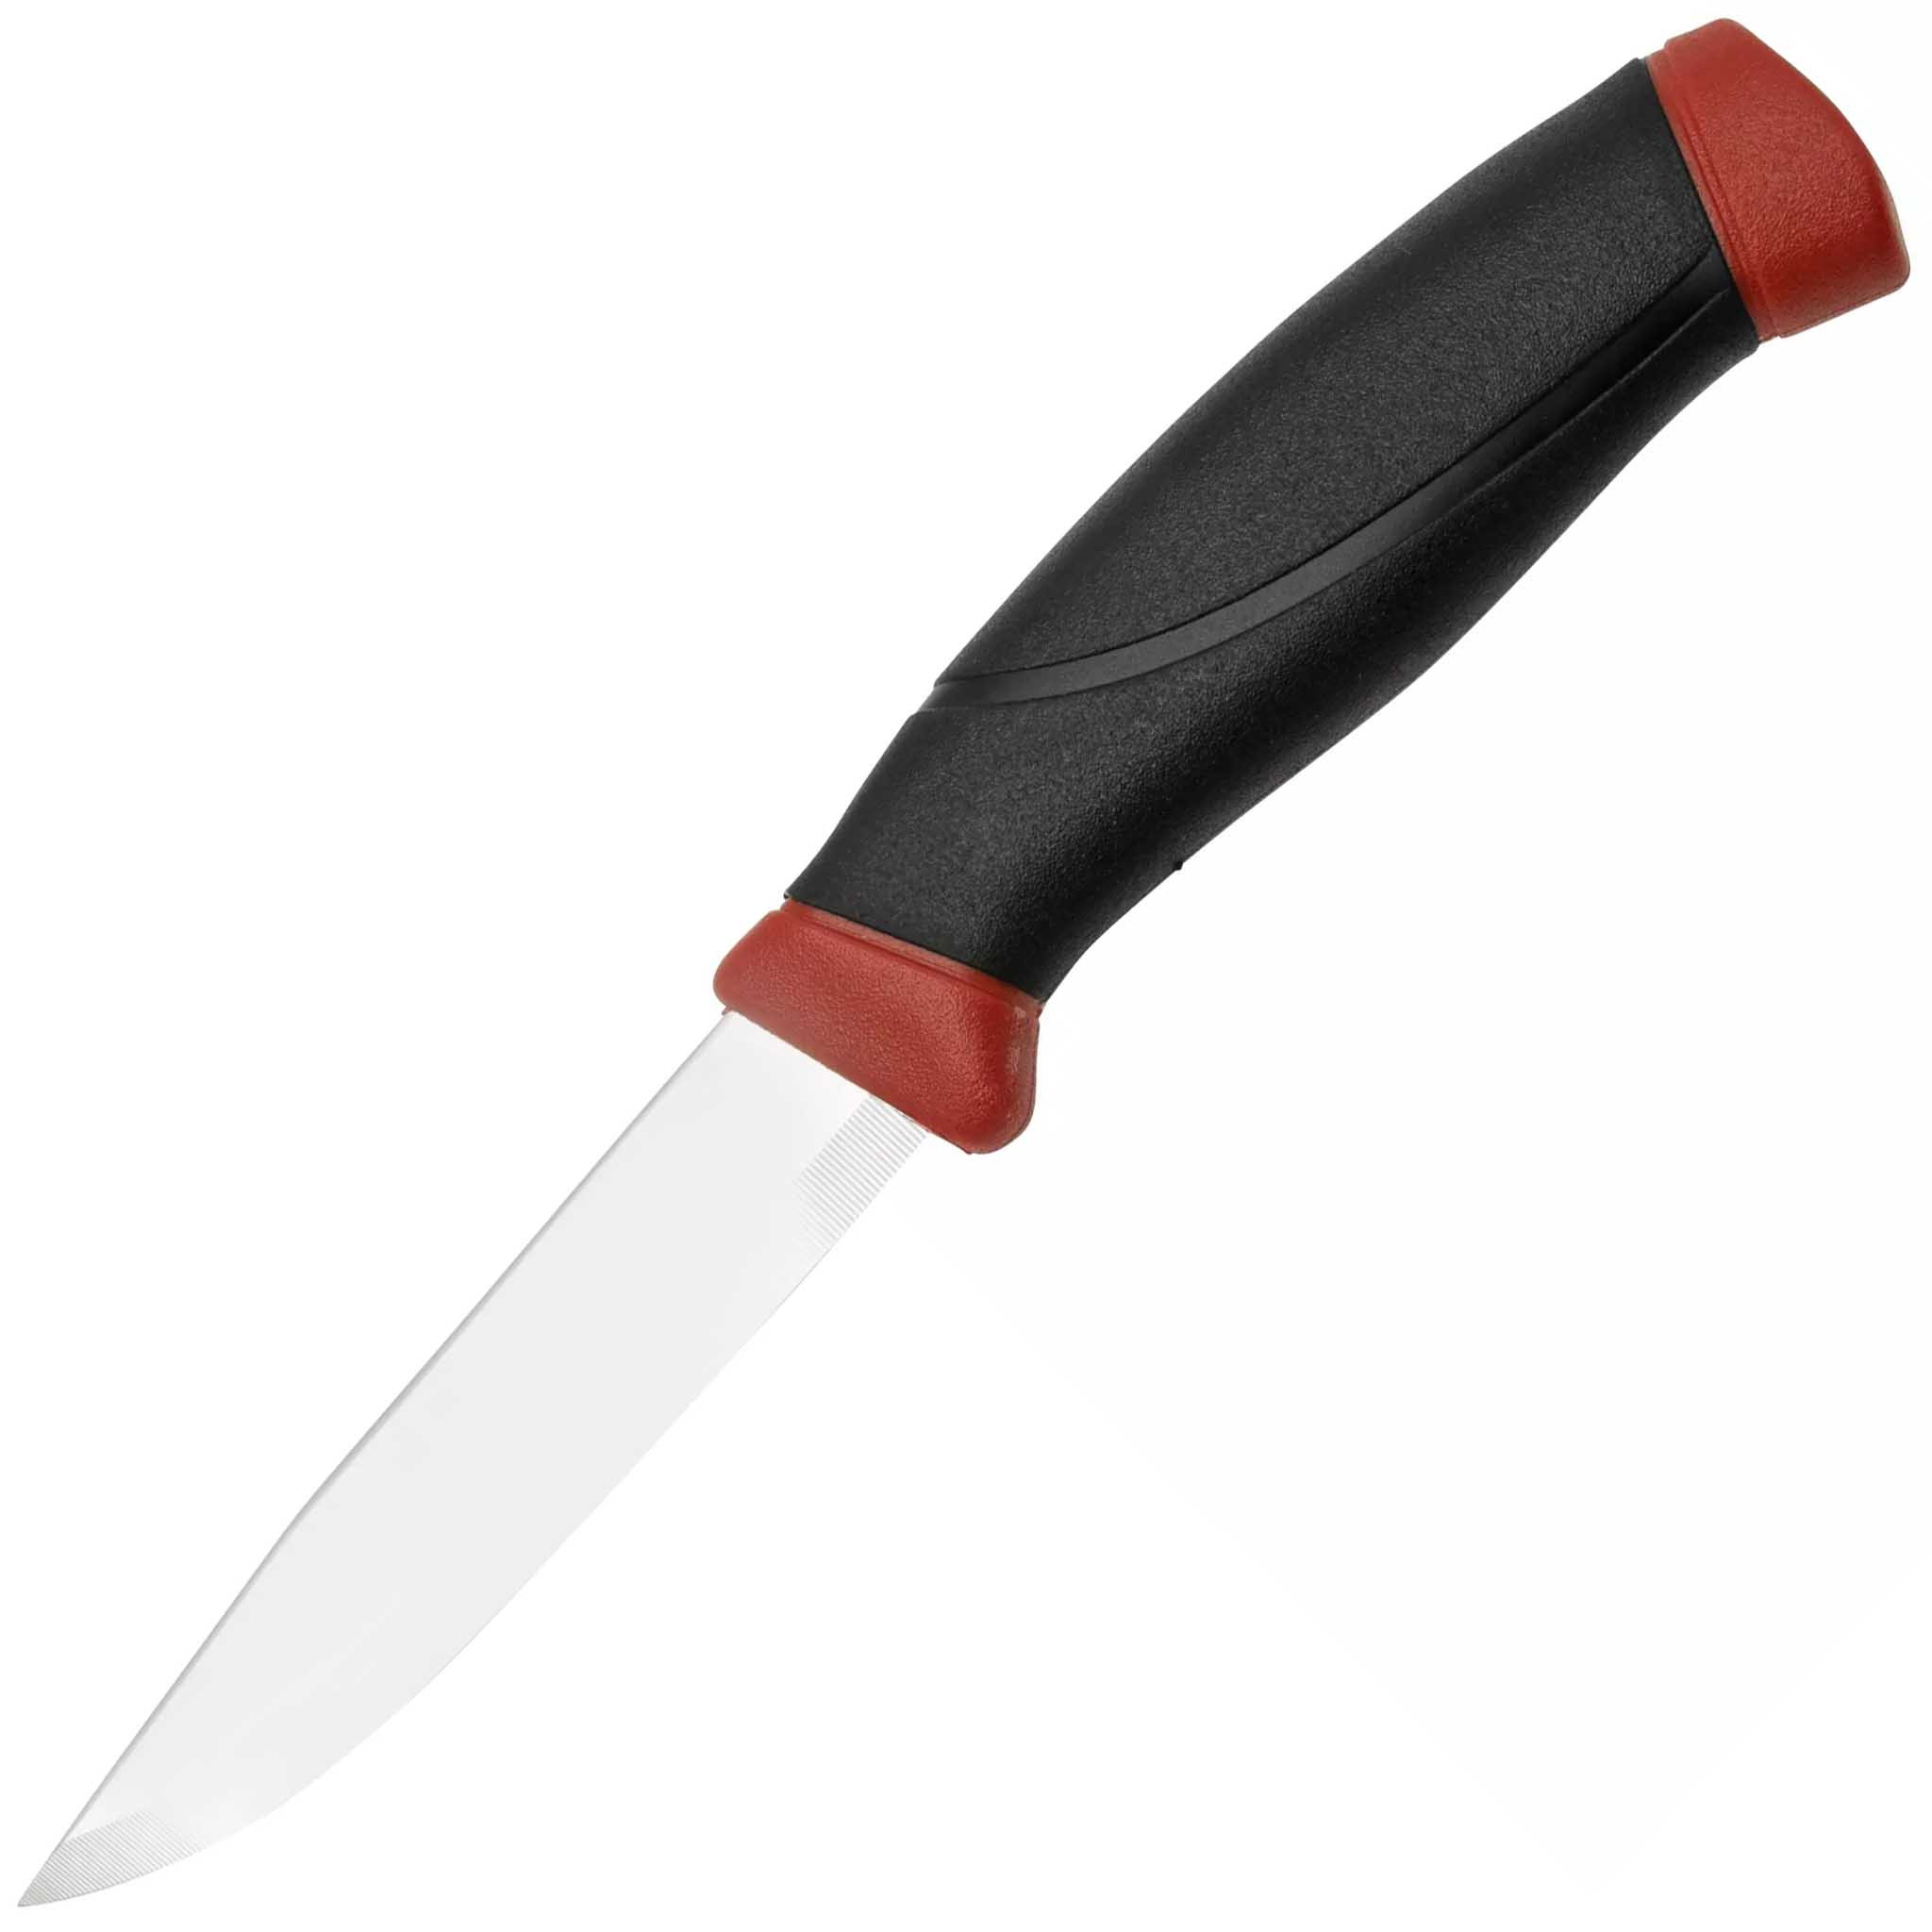 Нож с фиксированным лезвием Morakniv Companion, сталь Sandvik 12C27, рукоять резина, Dala red нож morakniv eldris огниво зеленый